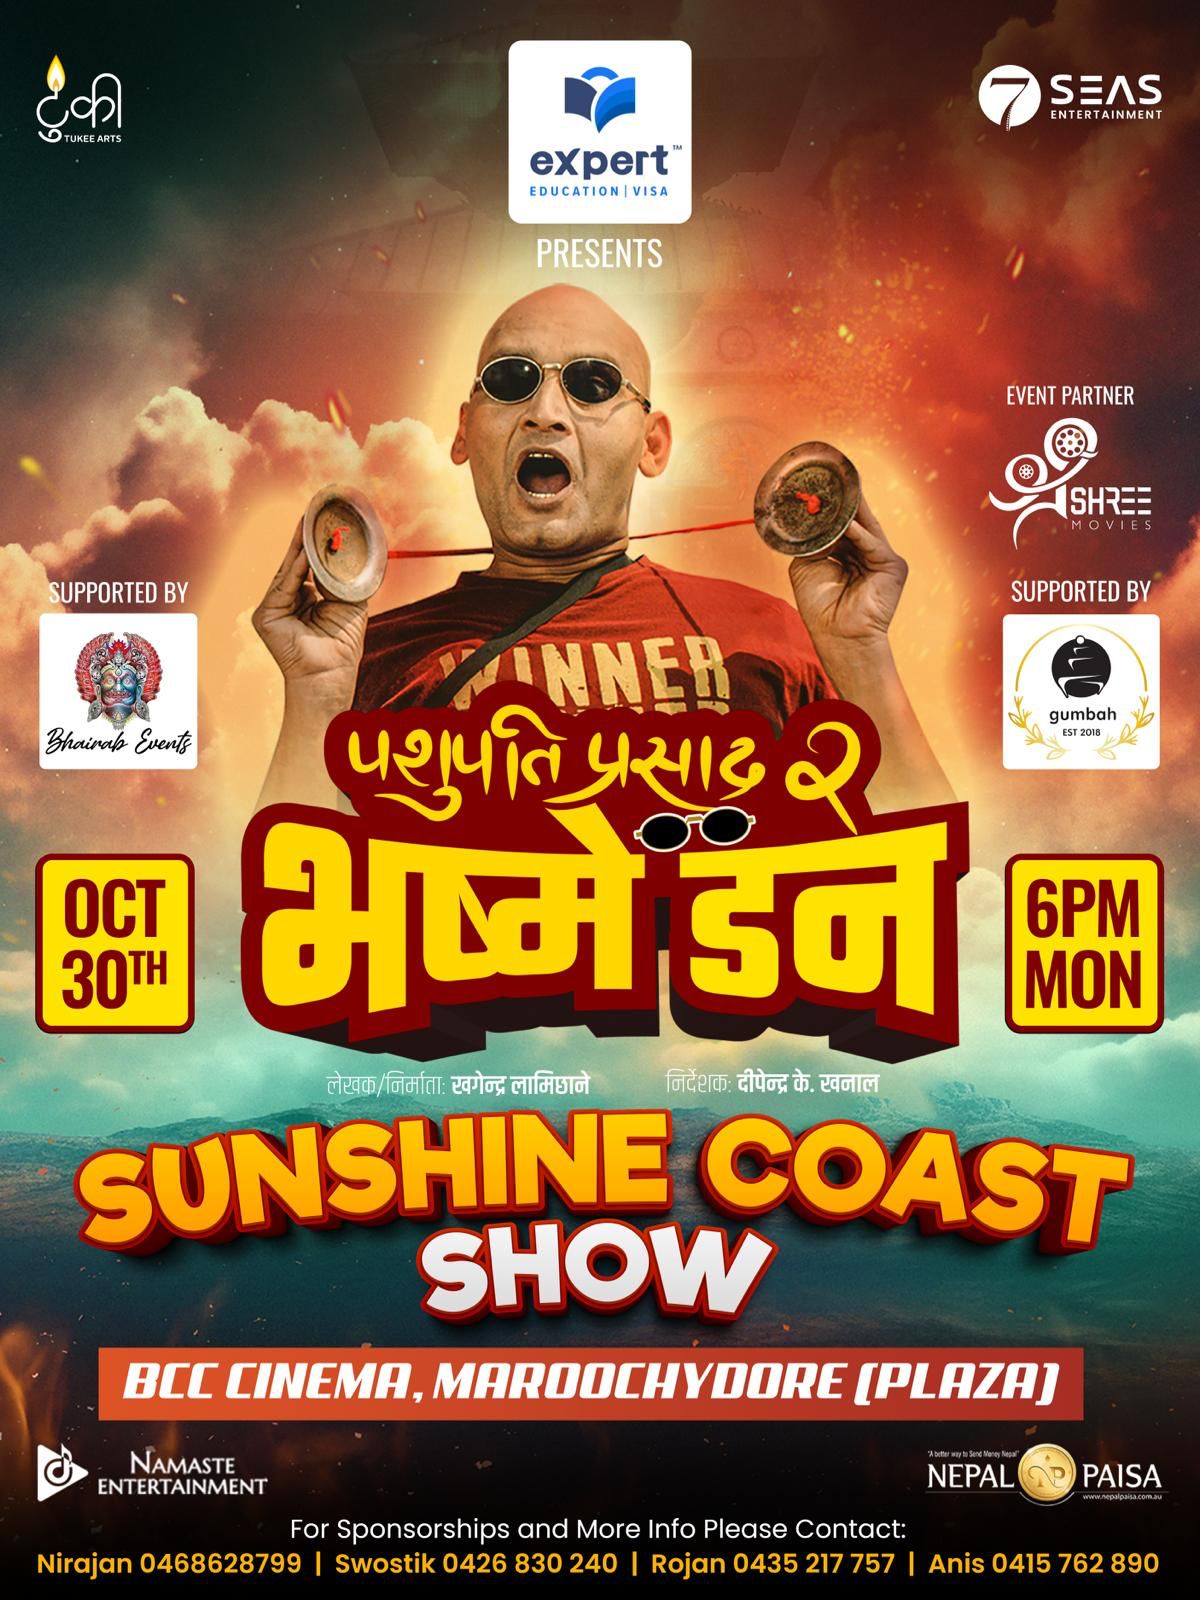 SunShine Coast_Pashupati Prasad 2_Bhasme Don